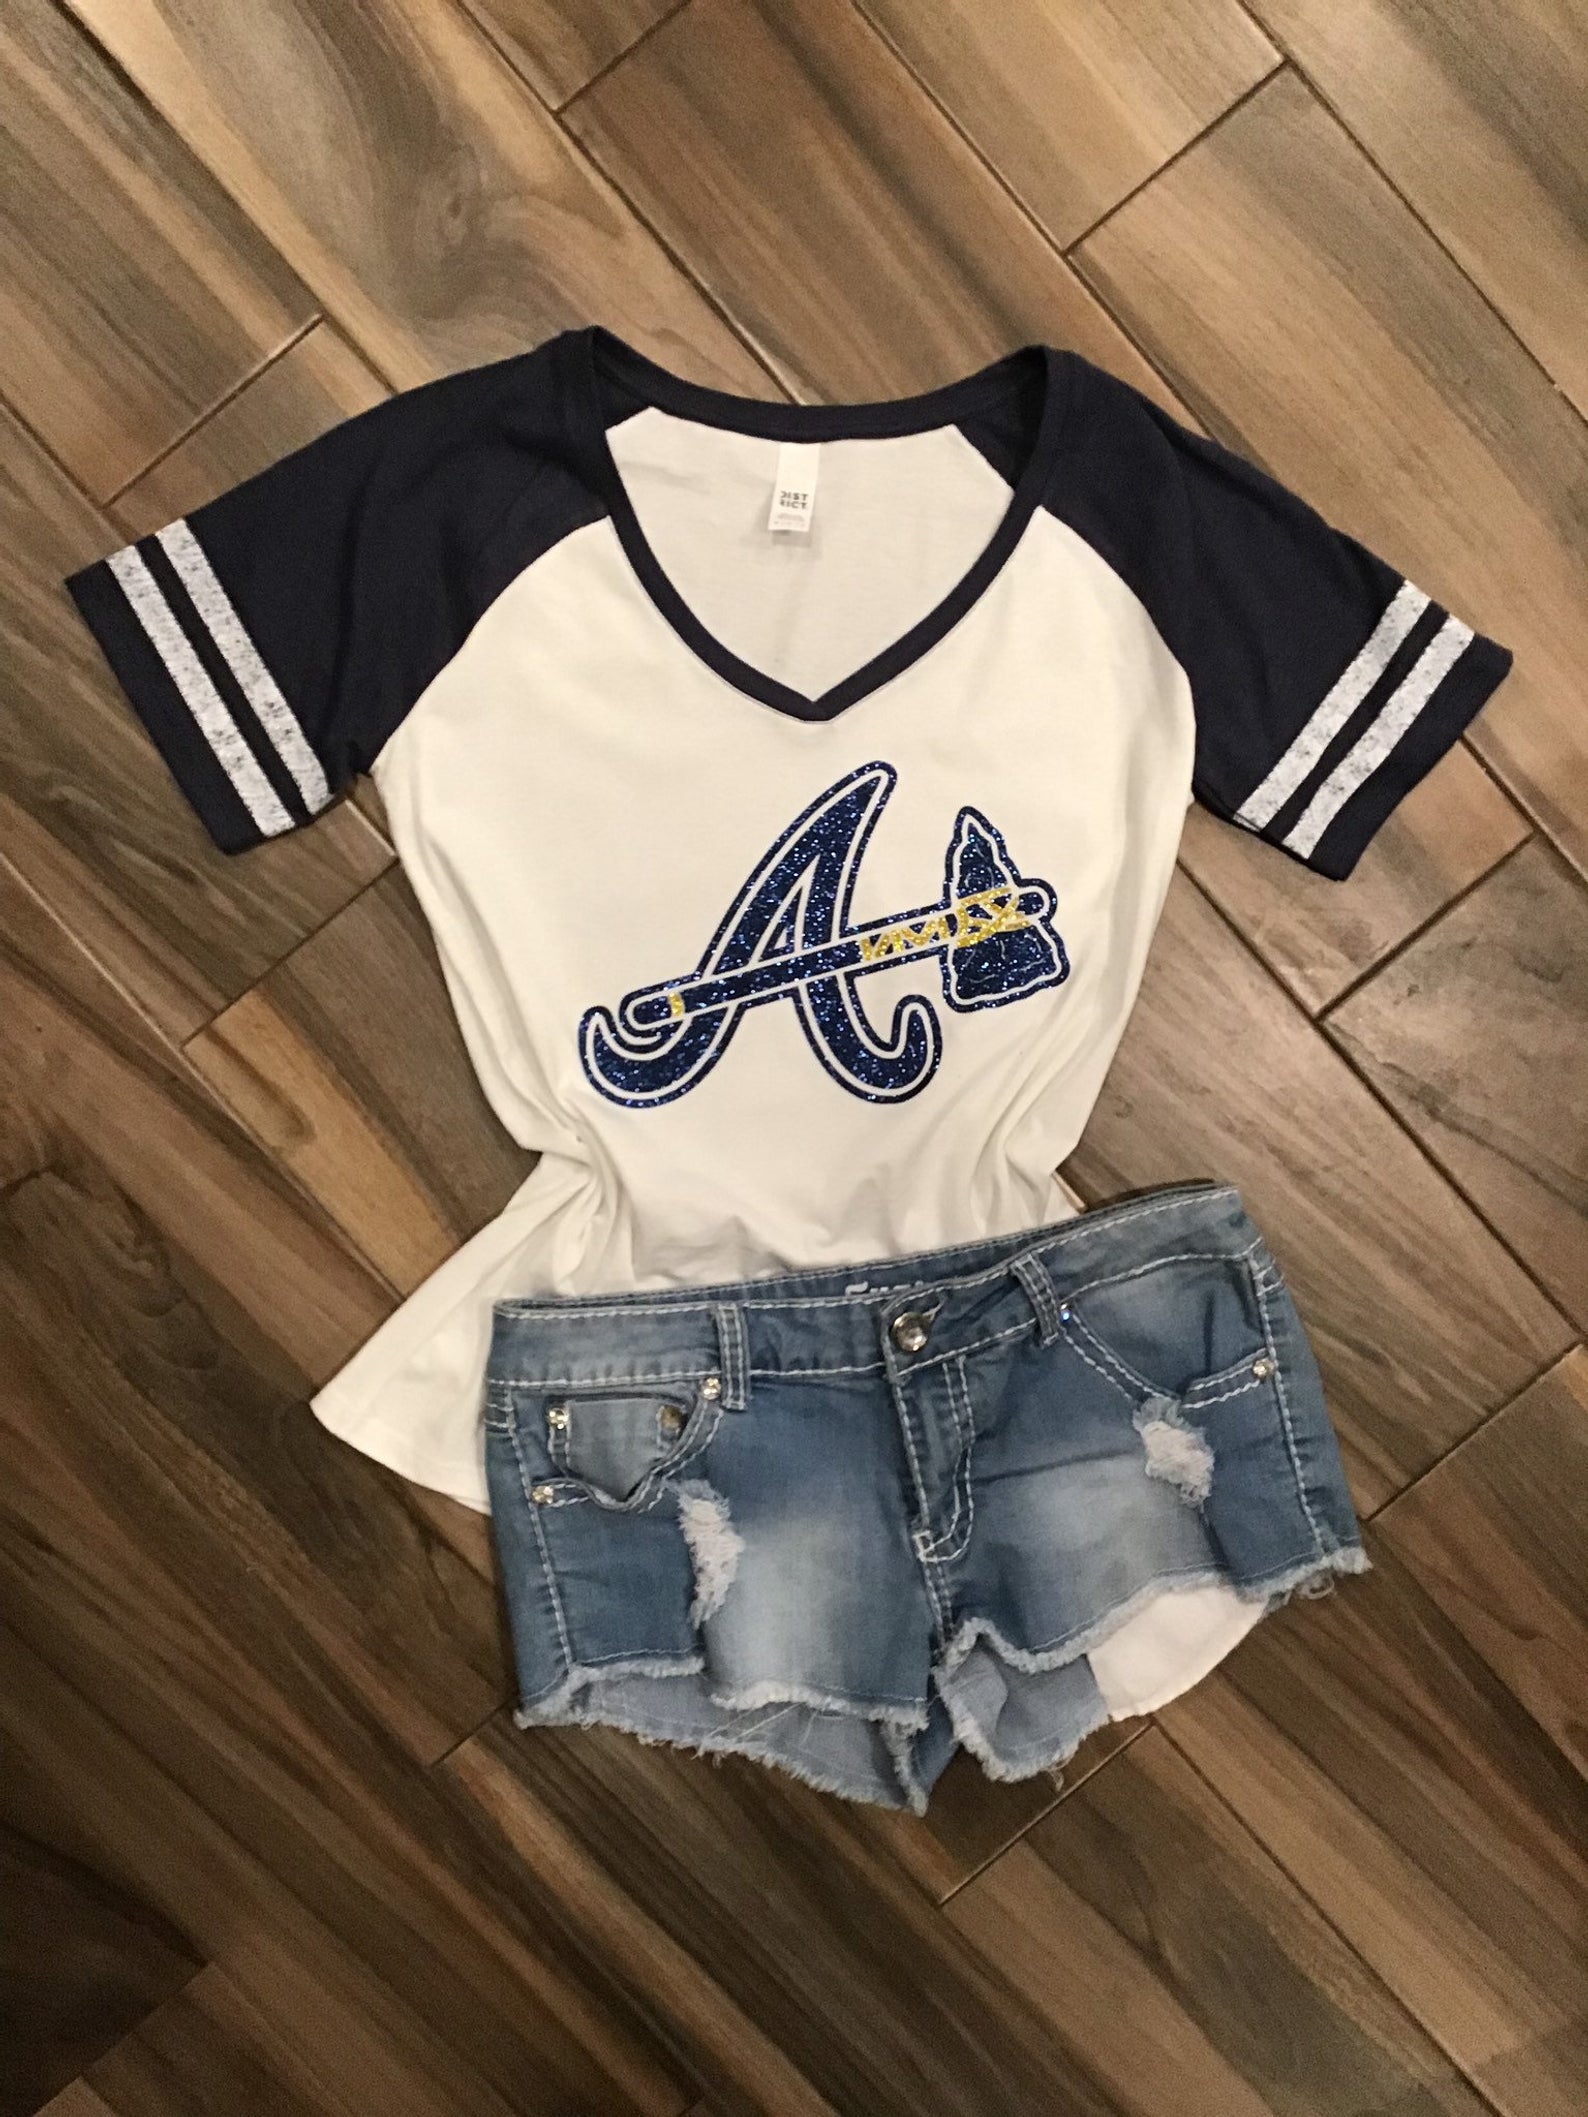 Just A Little Love Braves Shirt Atlanta Braves Baseball Tee